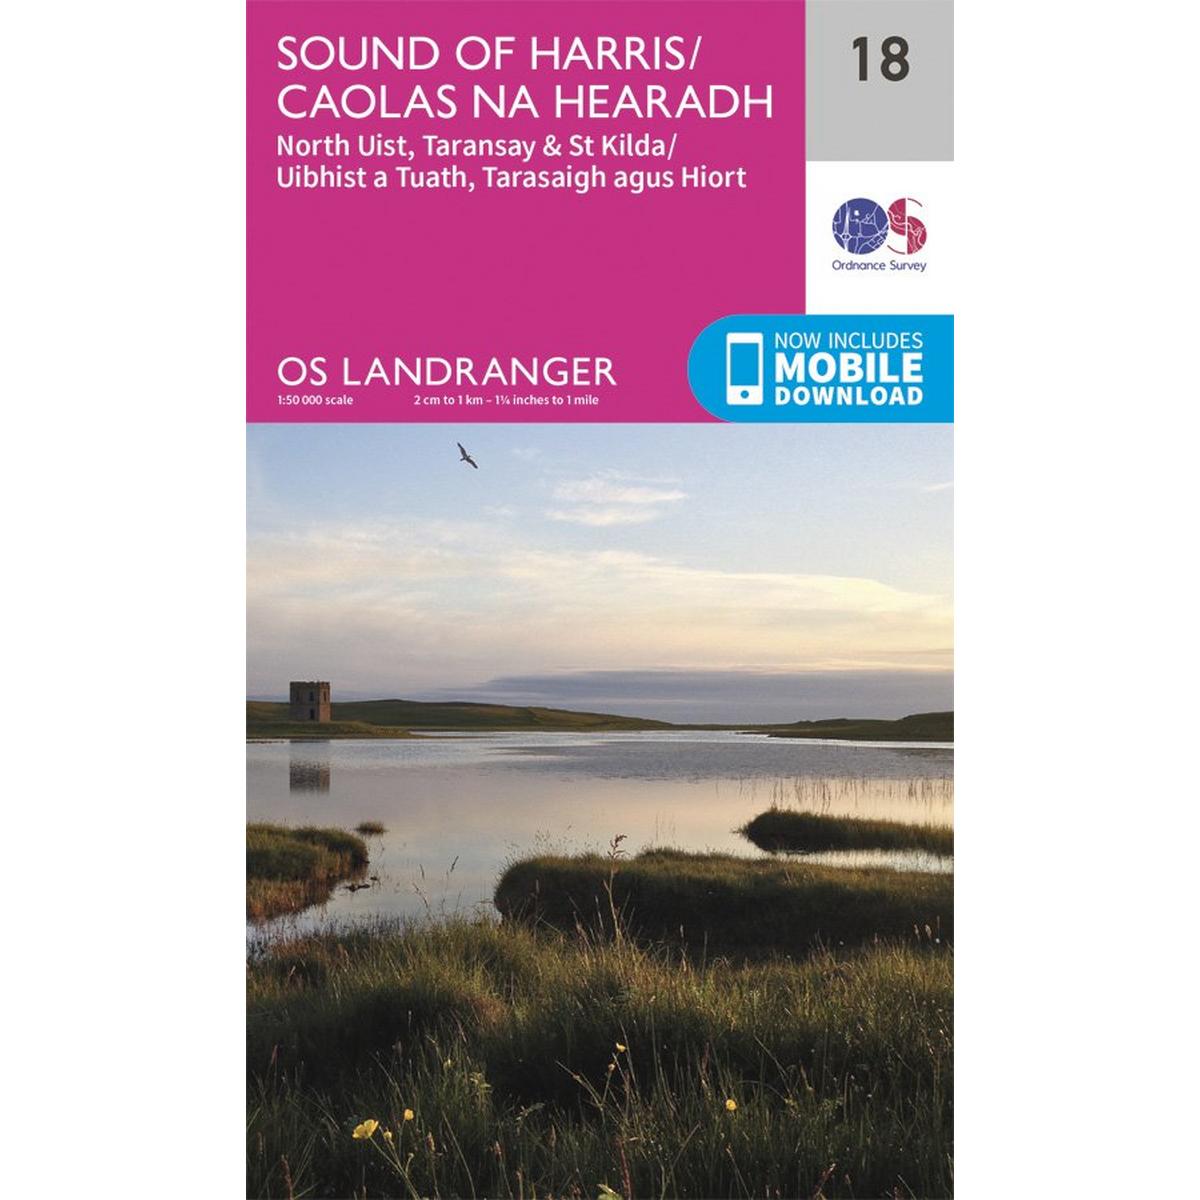 Ordnance Survey OS Landranger Map 18 Sound of Harris, North Uist, Taransay & St Kilda